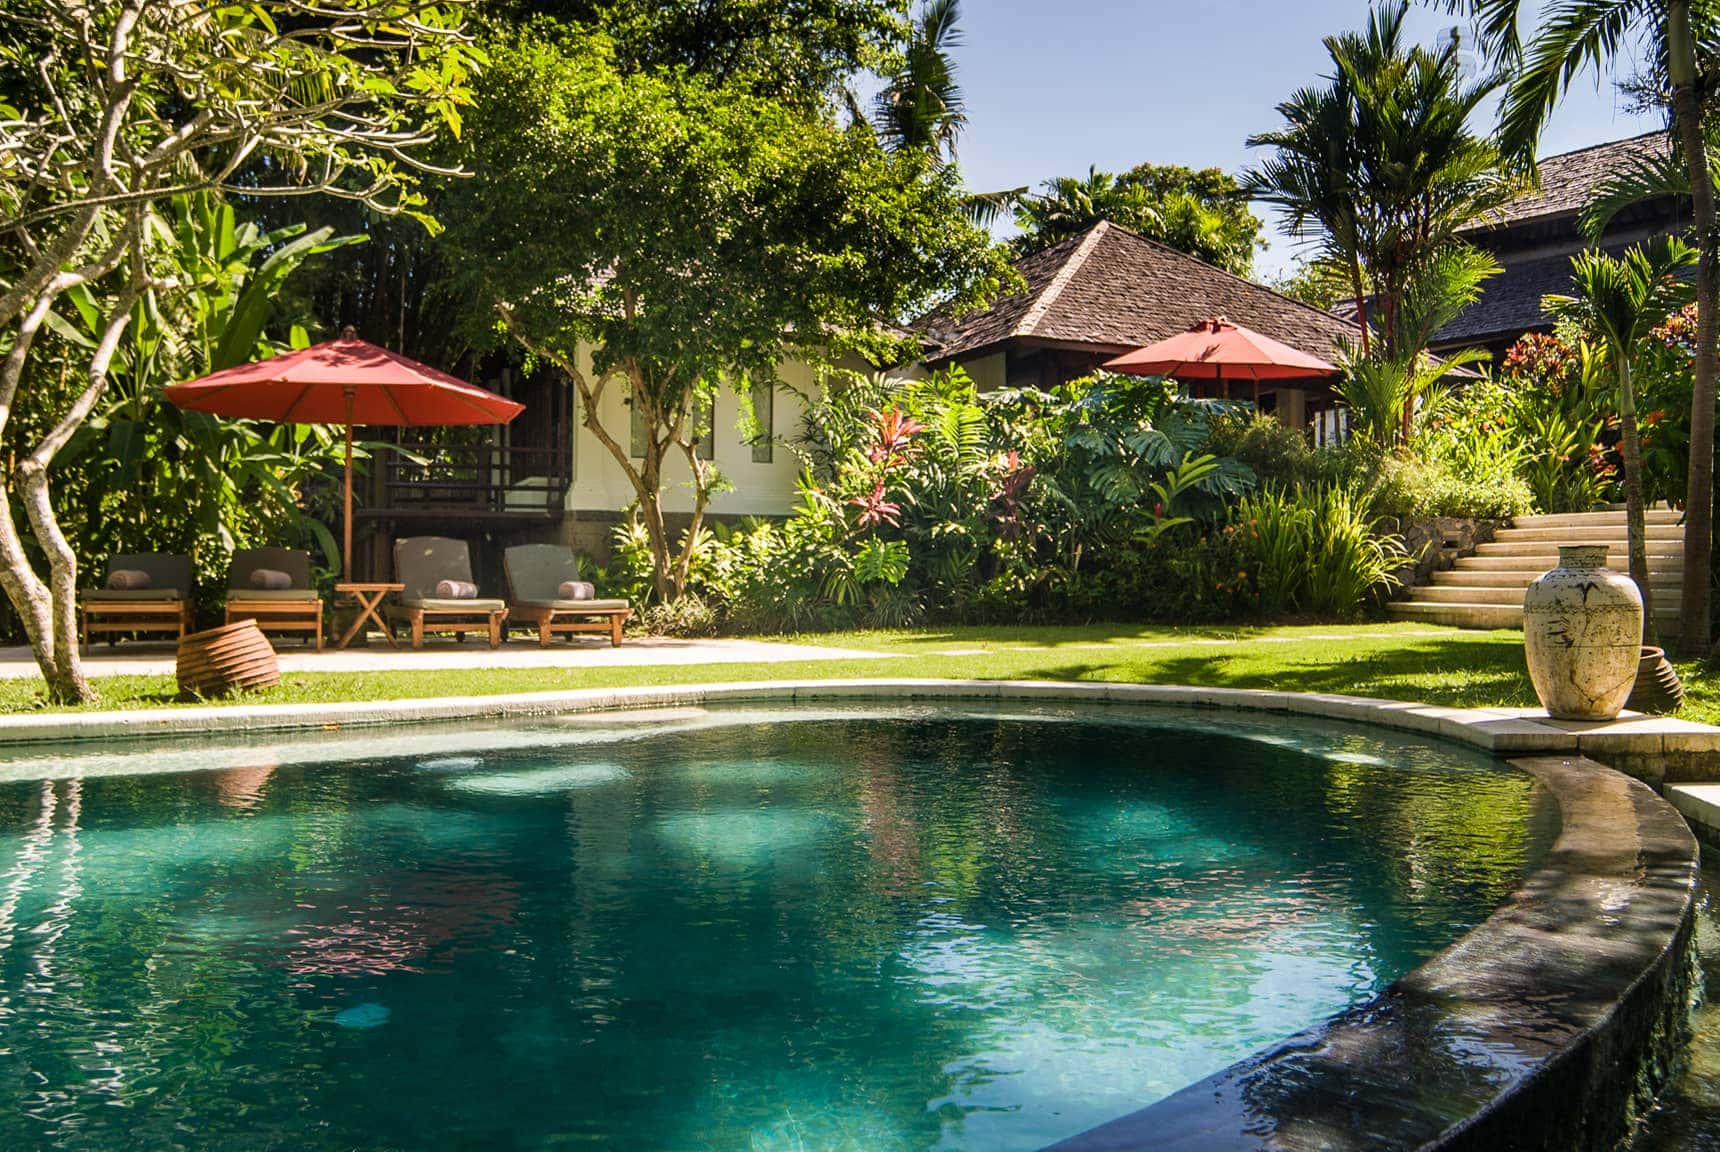 Villa Pangi Gita - Pererenan, Bali Indonesia (Bali villa photography by master photographer Rick Carmichael of LuxViz)